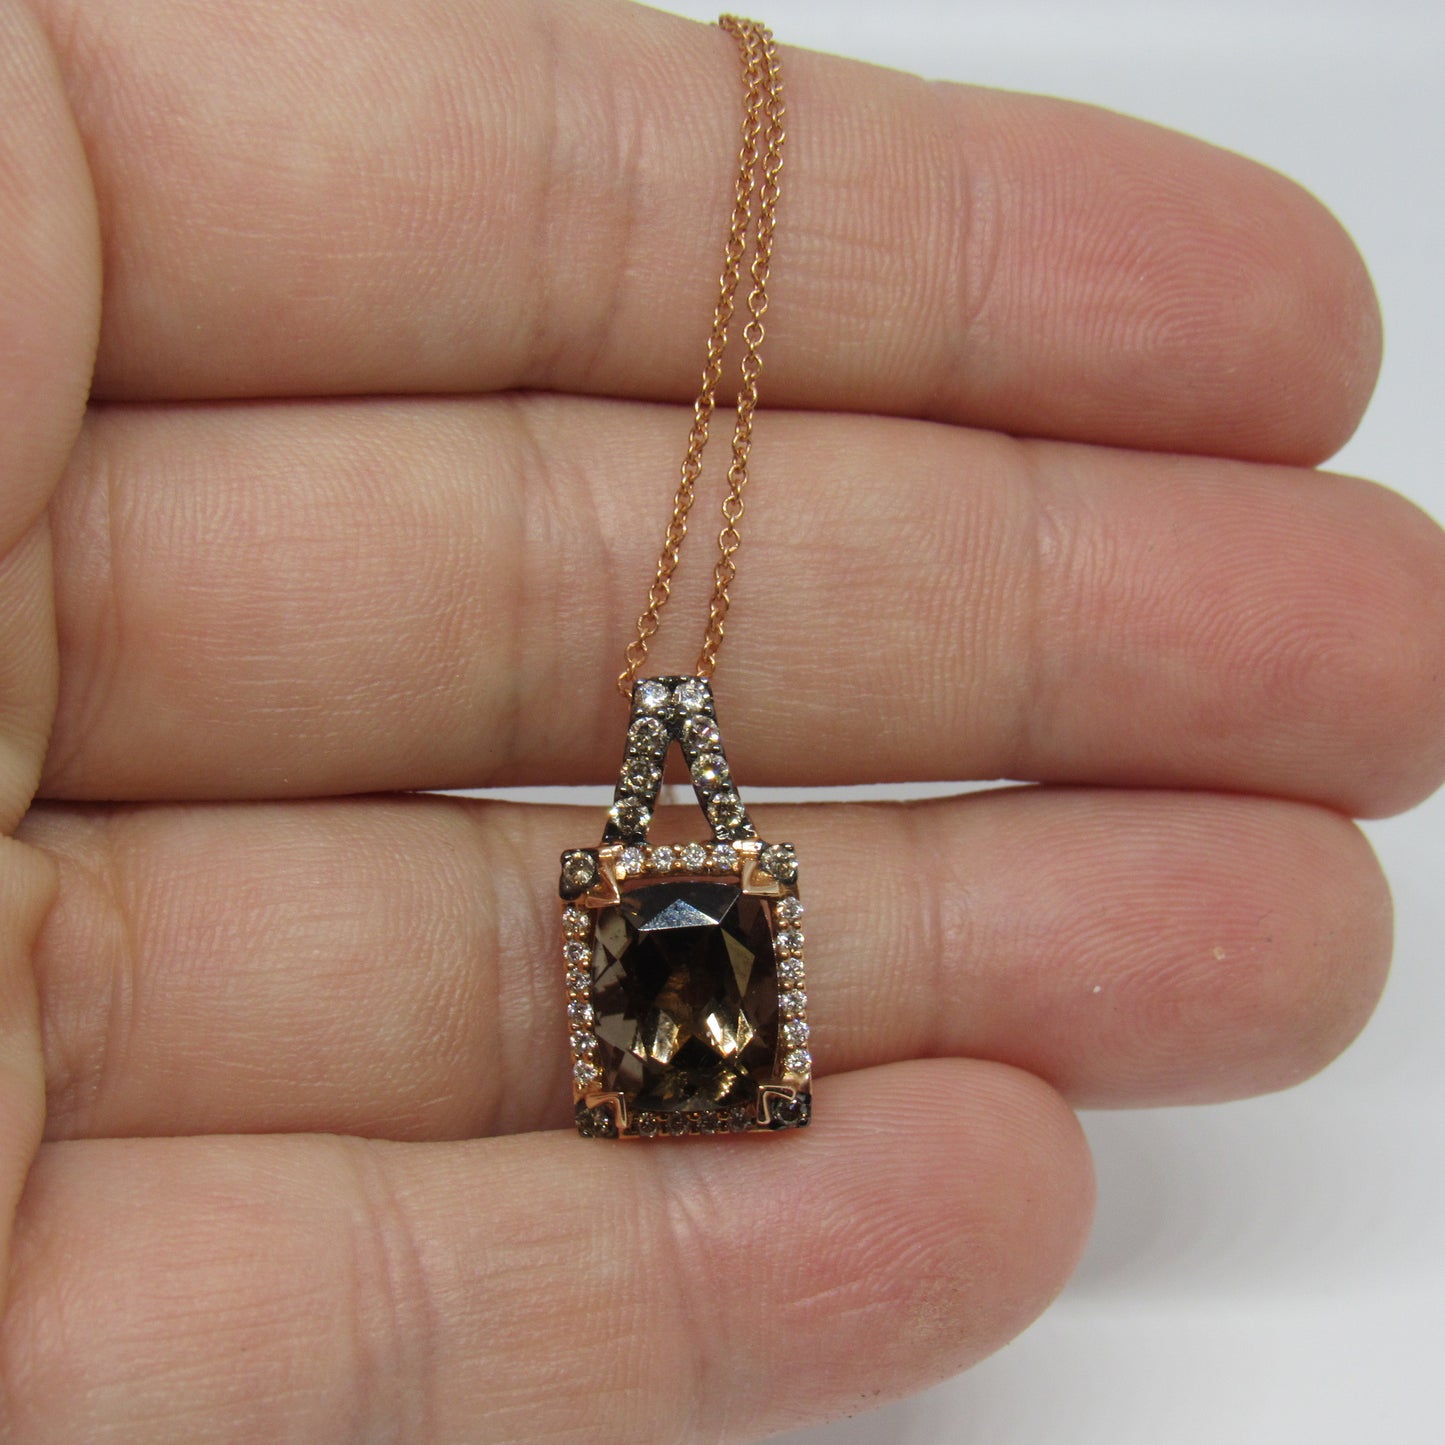 LeVian 14k Rose Gold Chocolate Diamonds Smoky Quartz Pendant Necklace - 18 in